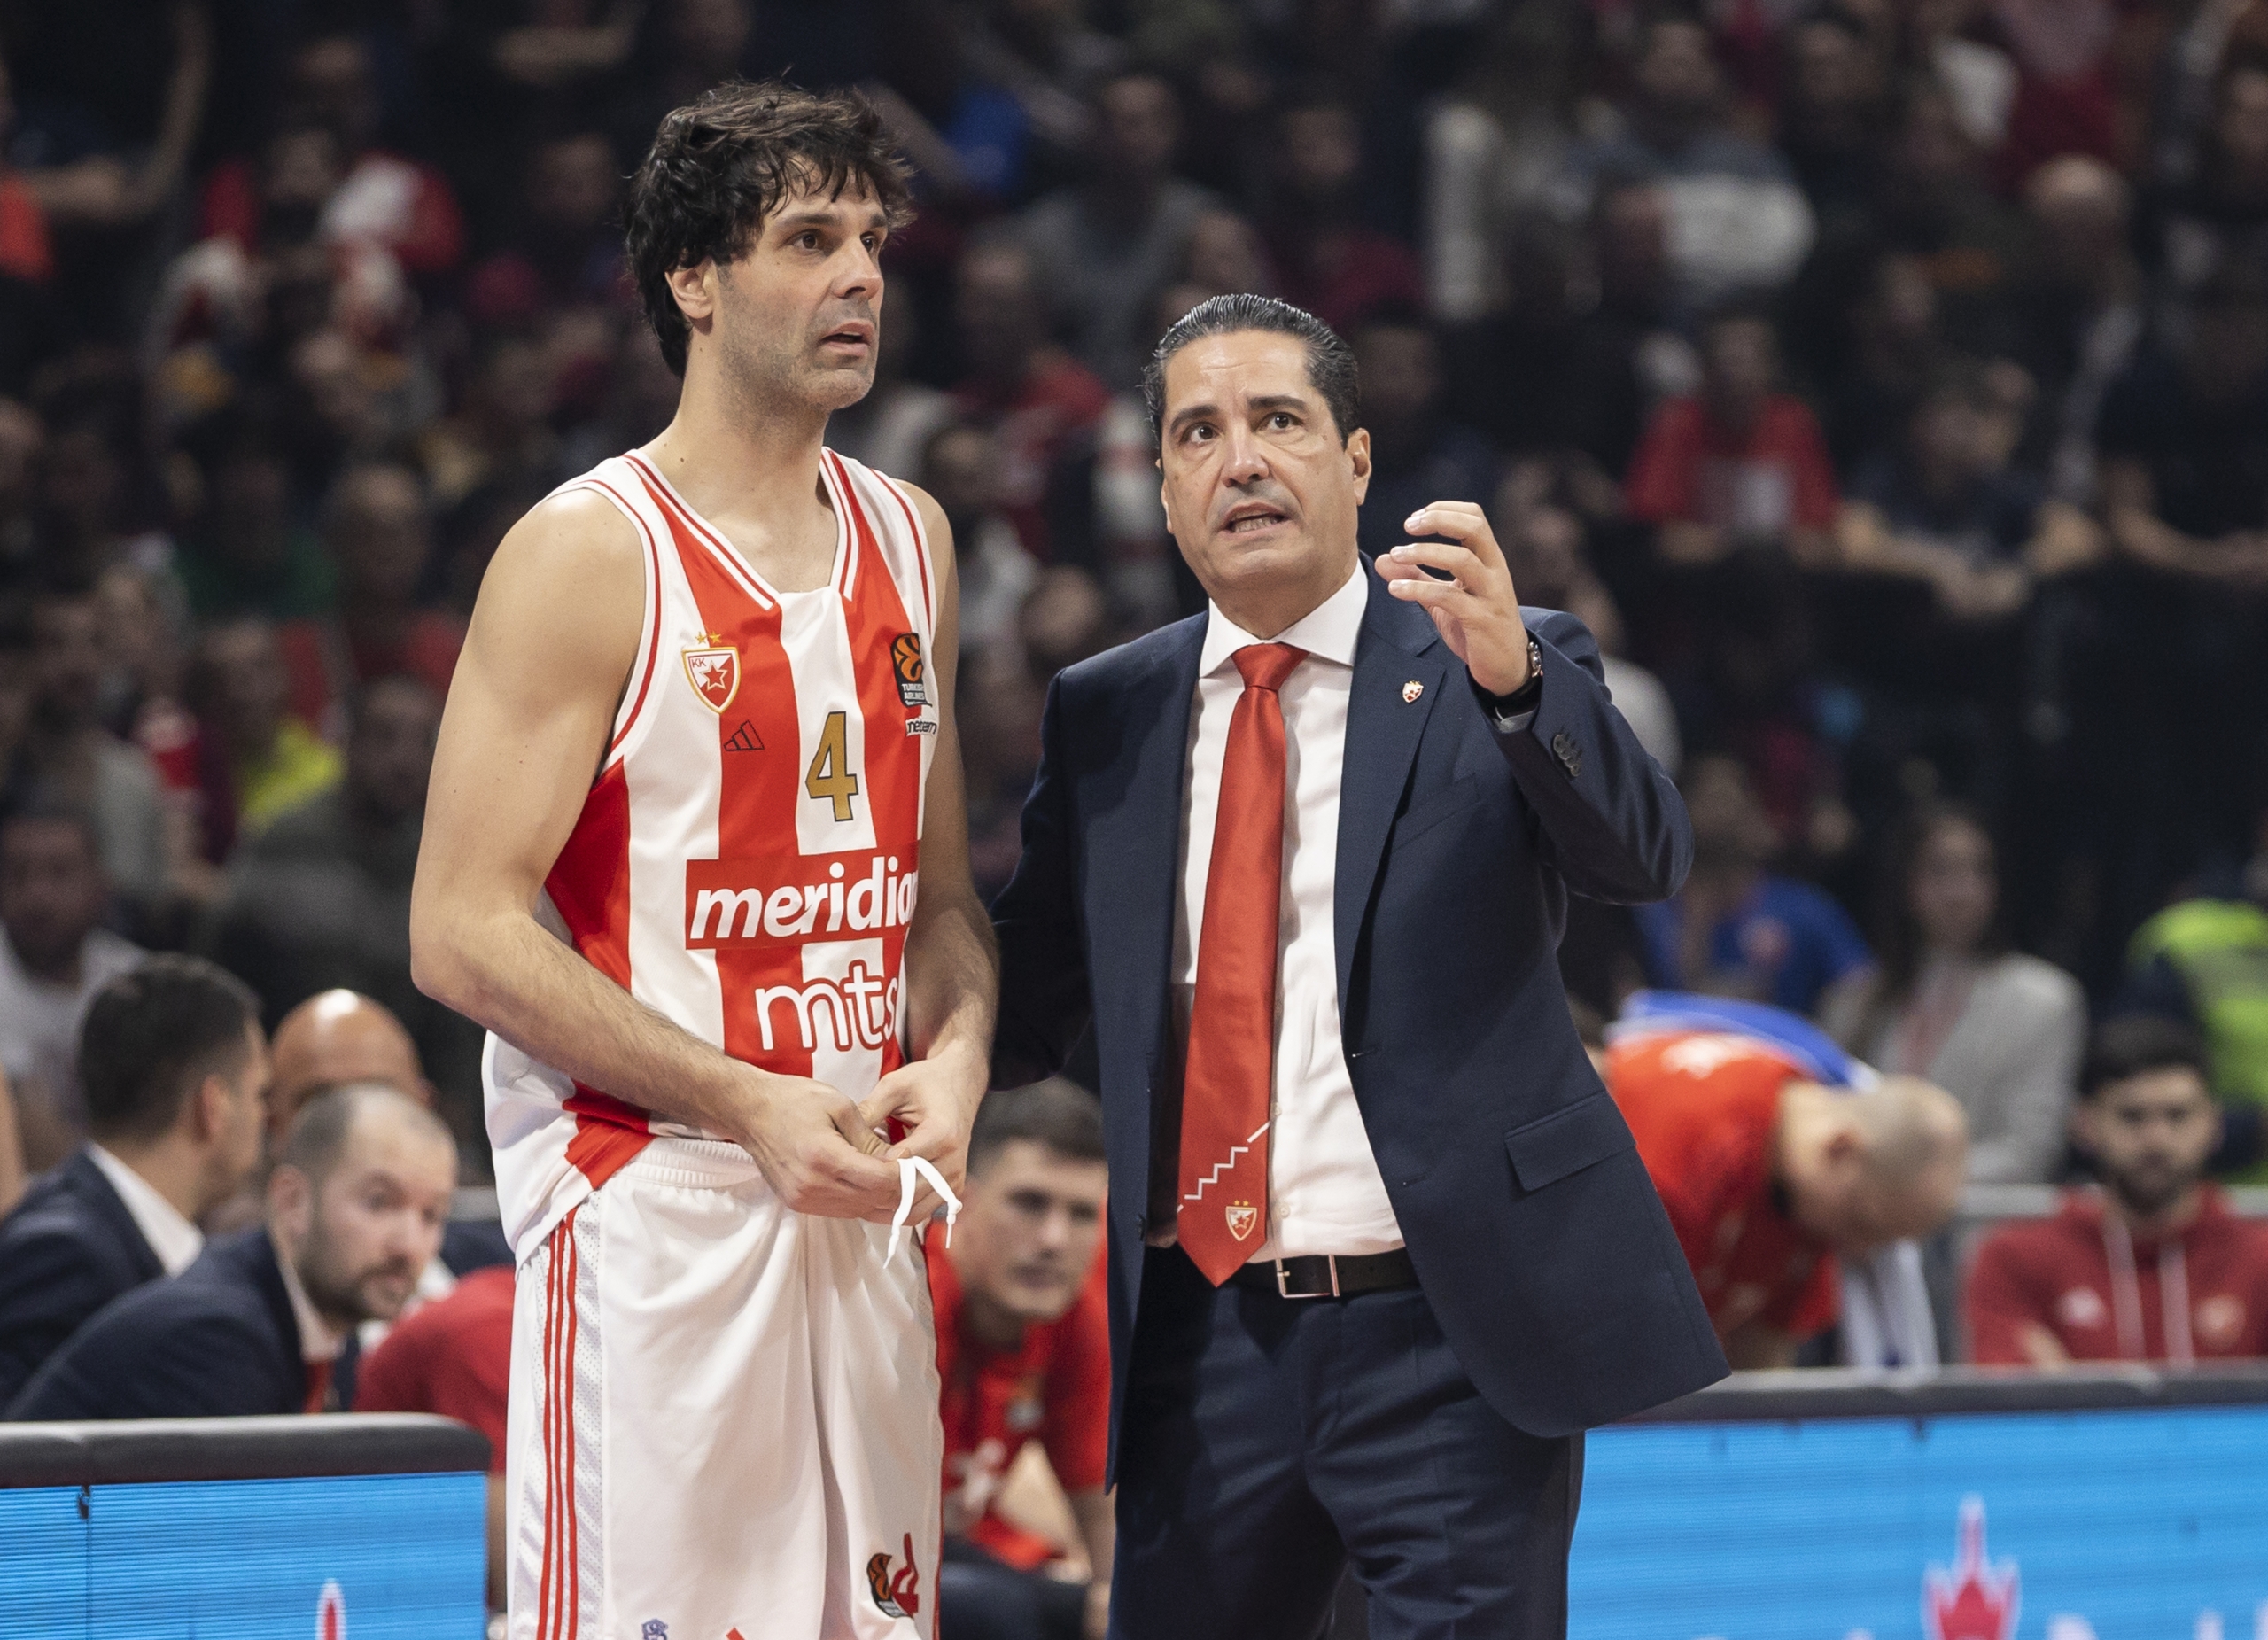 Source: Srdjan Stevanovic/Euroleague Basketball via Getty Images